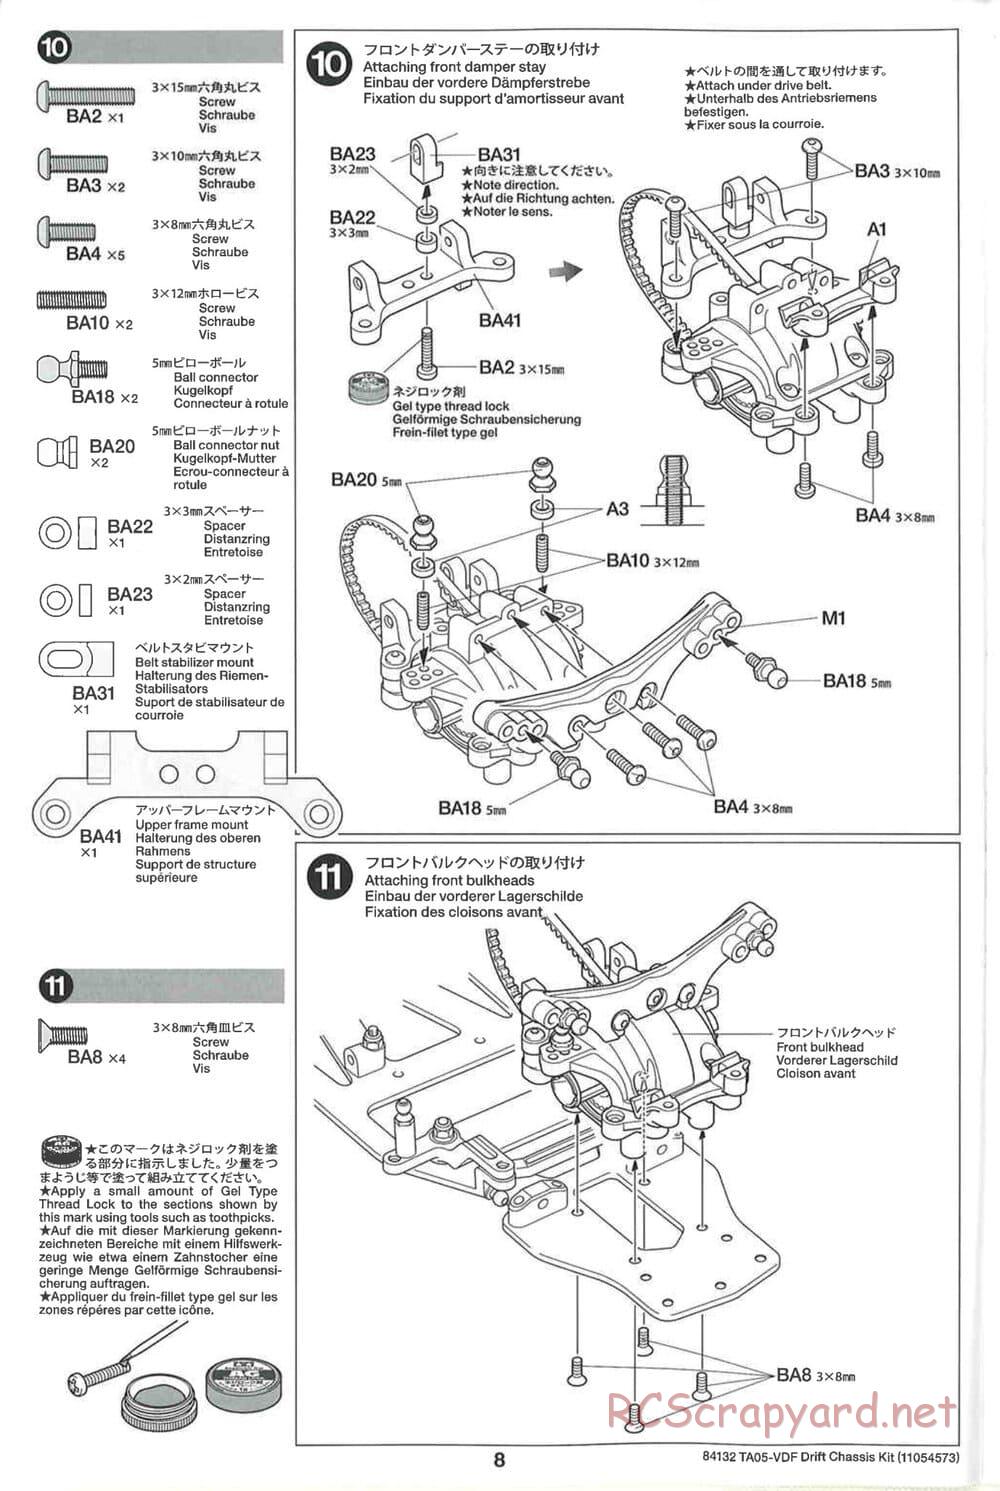 Tamiya - TA05-VDF Drift Spec Chassis - Manual - Page 8